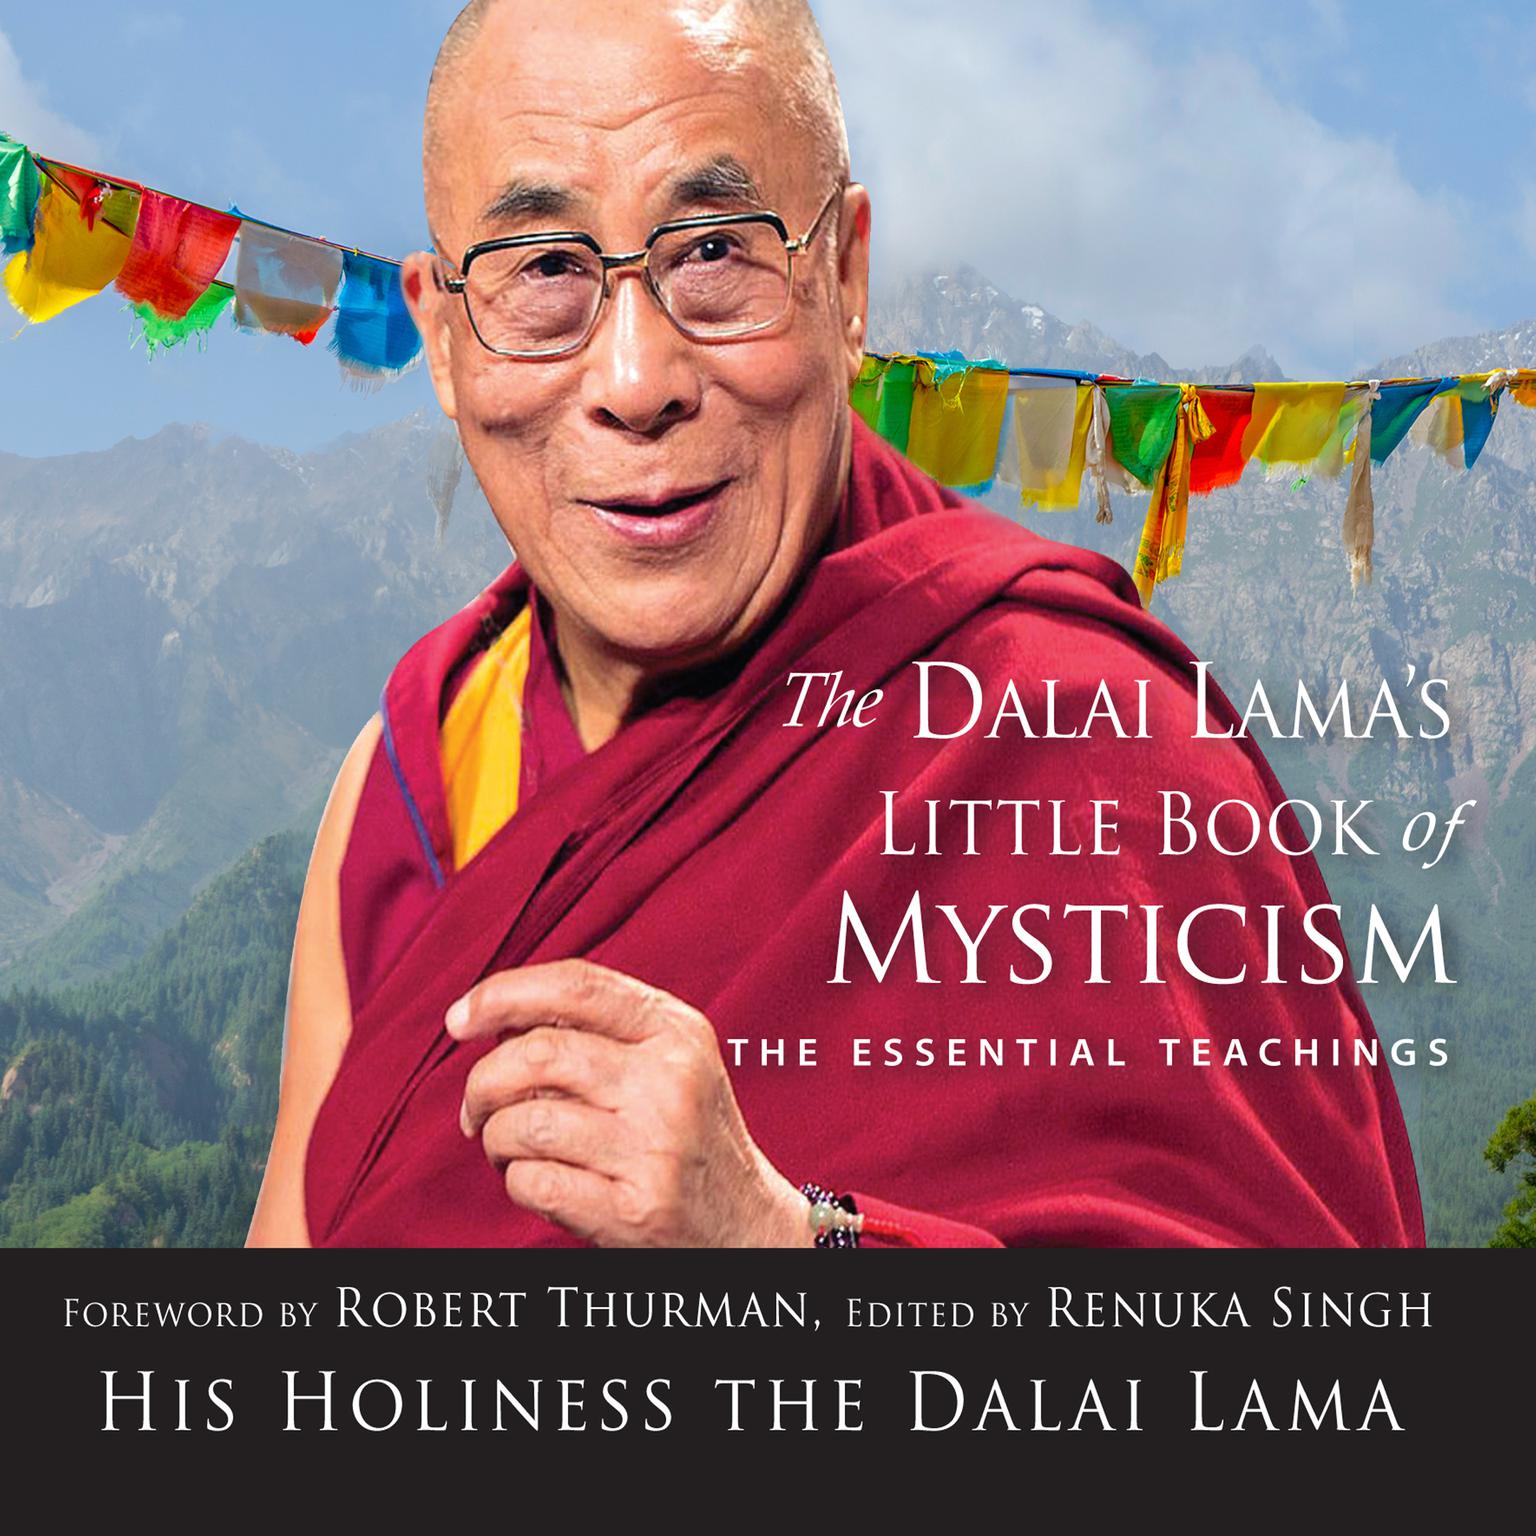 Dalai Lamas Little Book of MysticismThe: The Essential Teachings Audiobook, by His Holiness the Dalai Lama